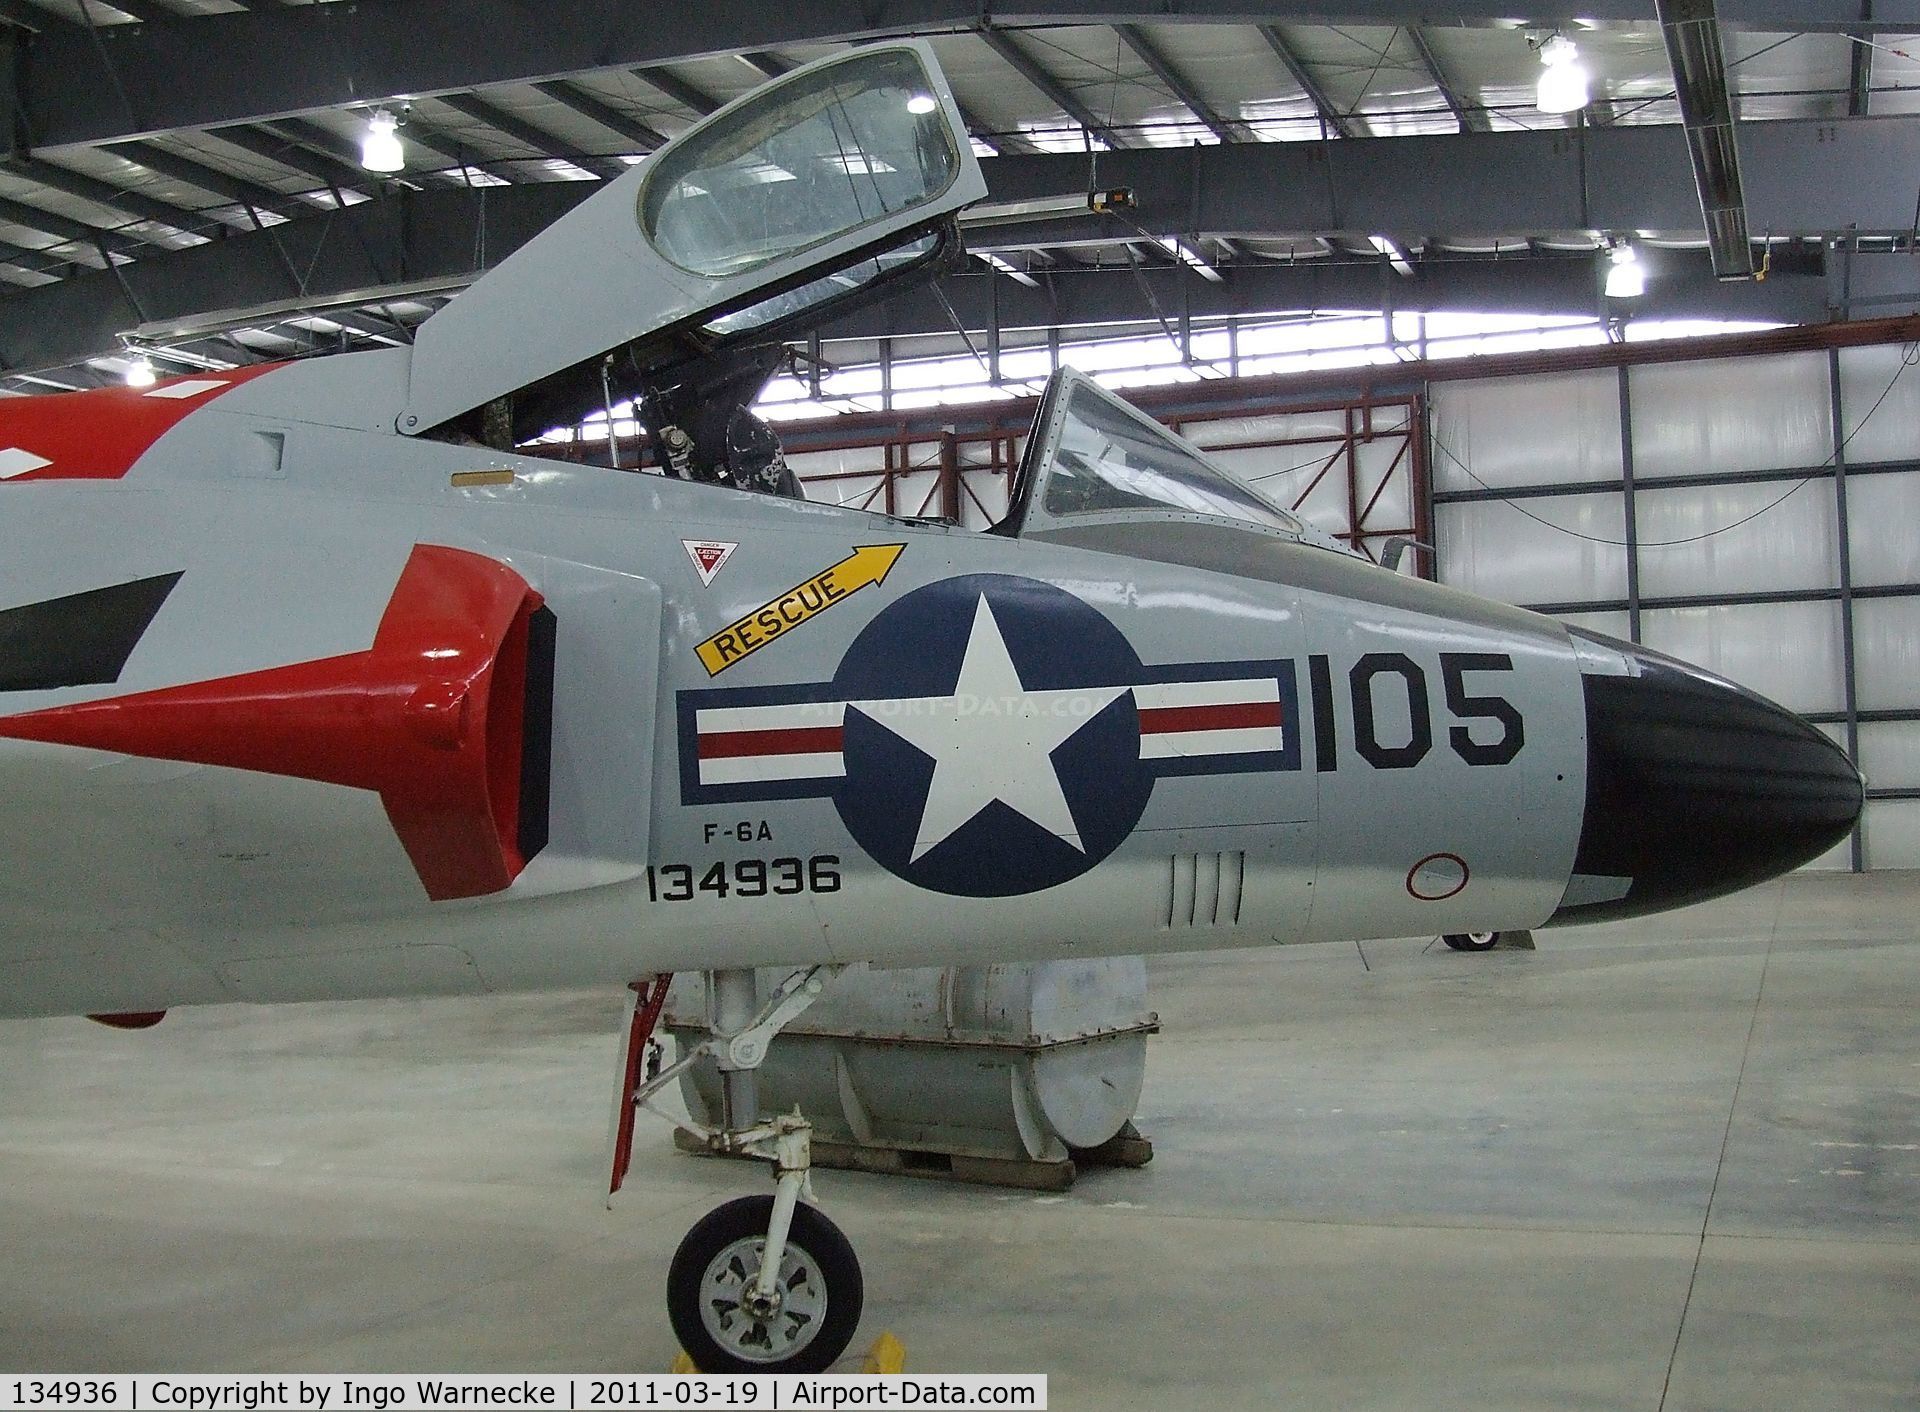 134936, Douglas F-6A Skyray C/N 10530, Douglas F4D-1 / F-6A Skyray at the Pueblo Weisbrod Aircraft Museum, Pueblo CO